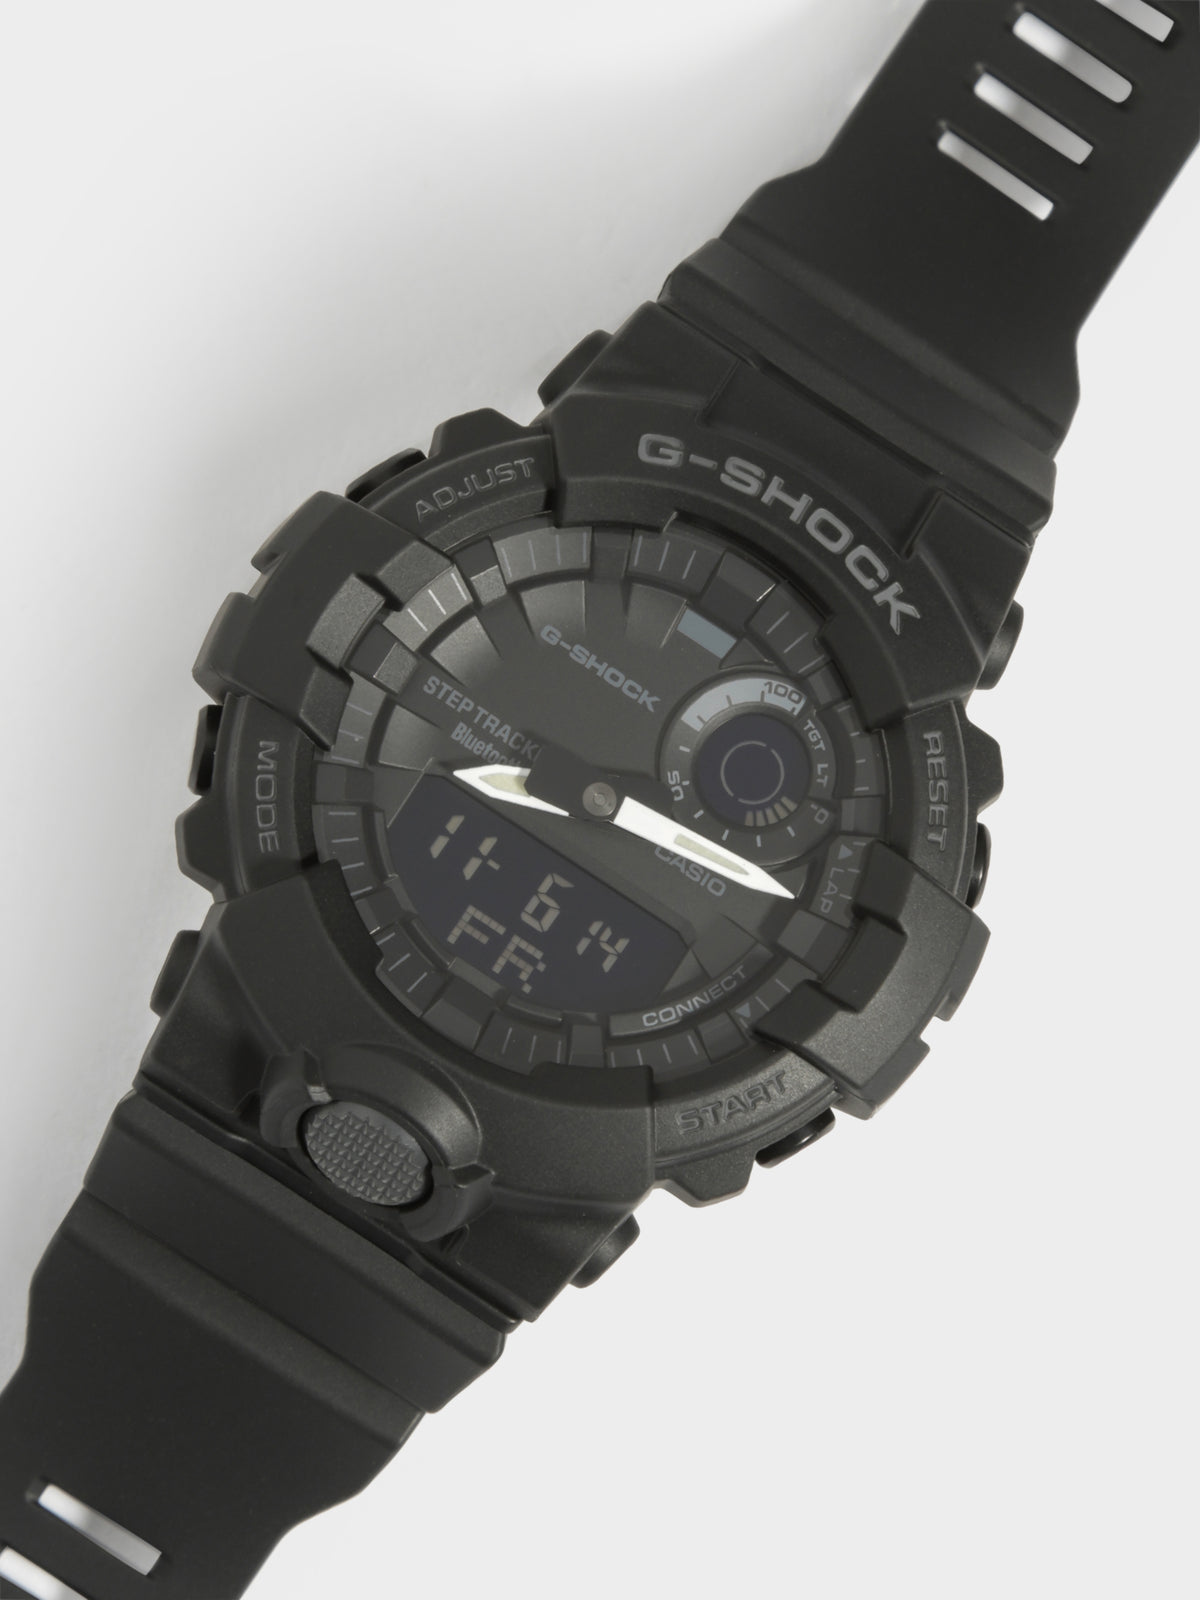 GBA800-1A Bluetooth Step Tracker Watch in Black